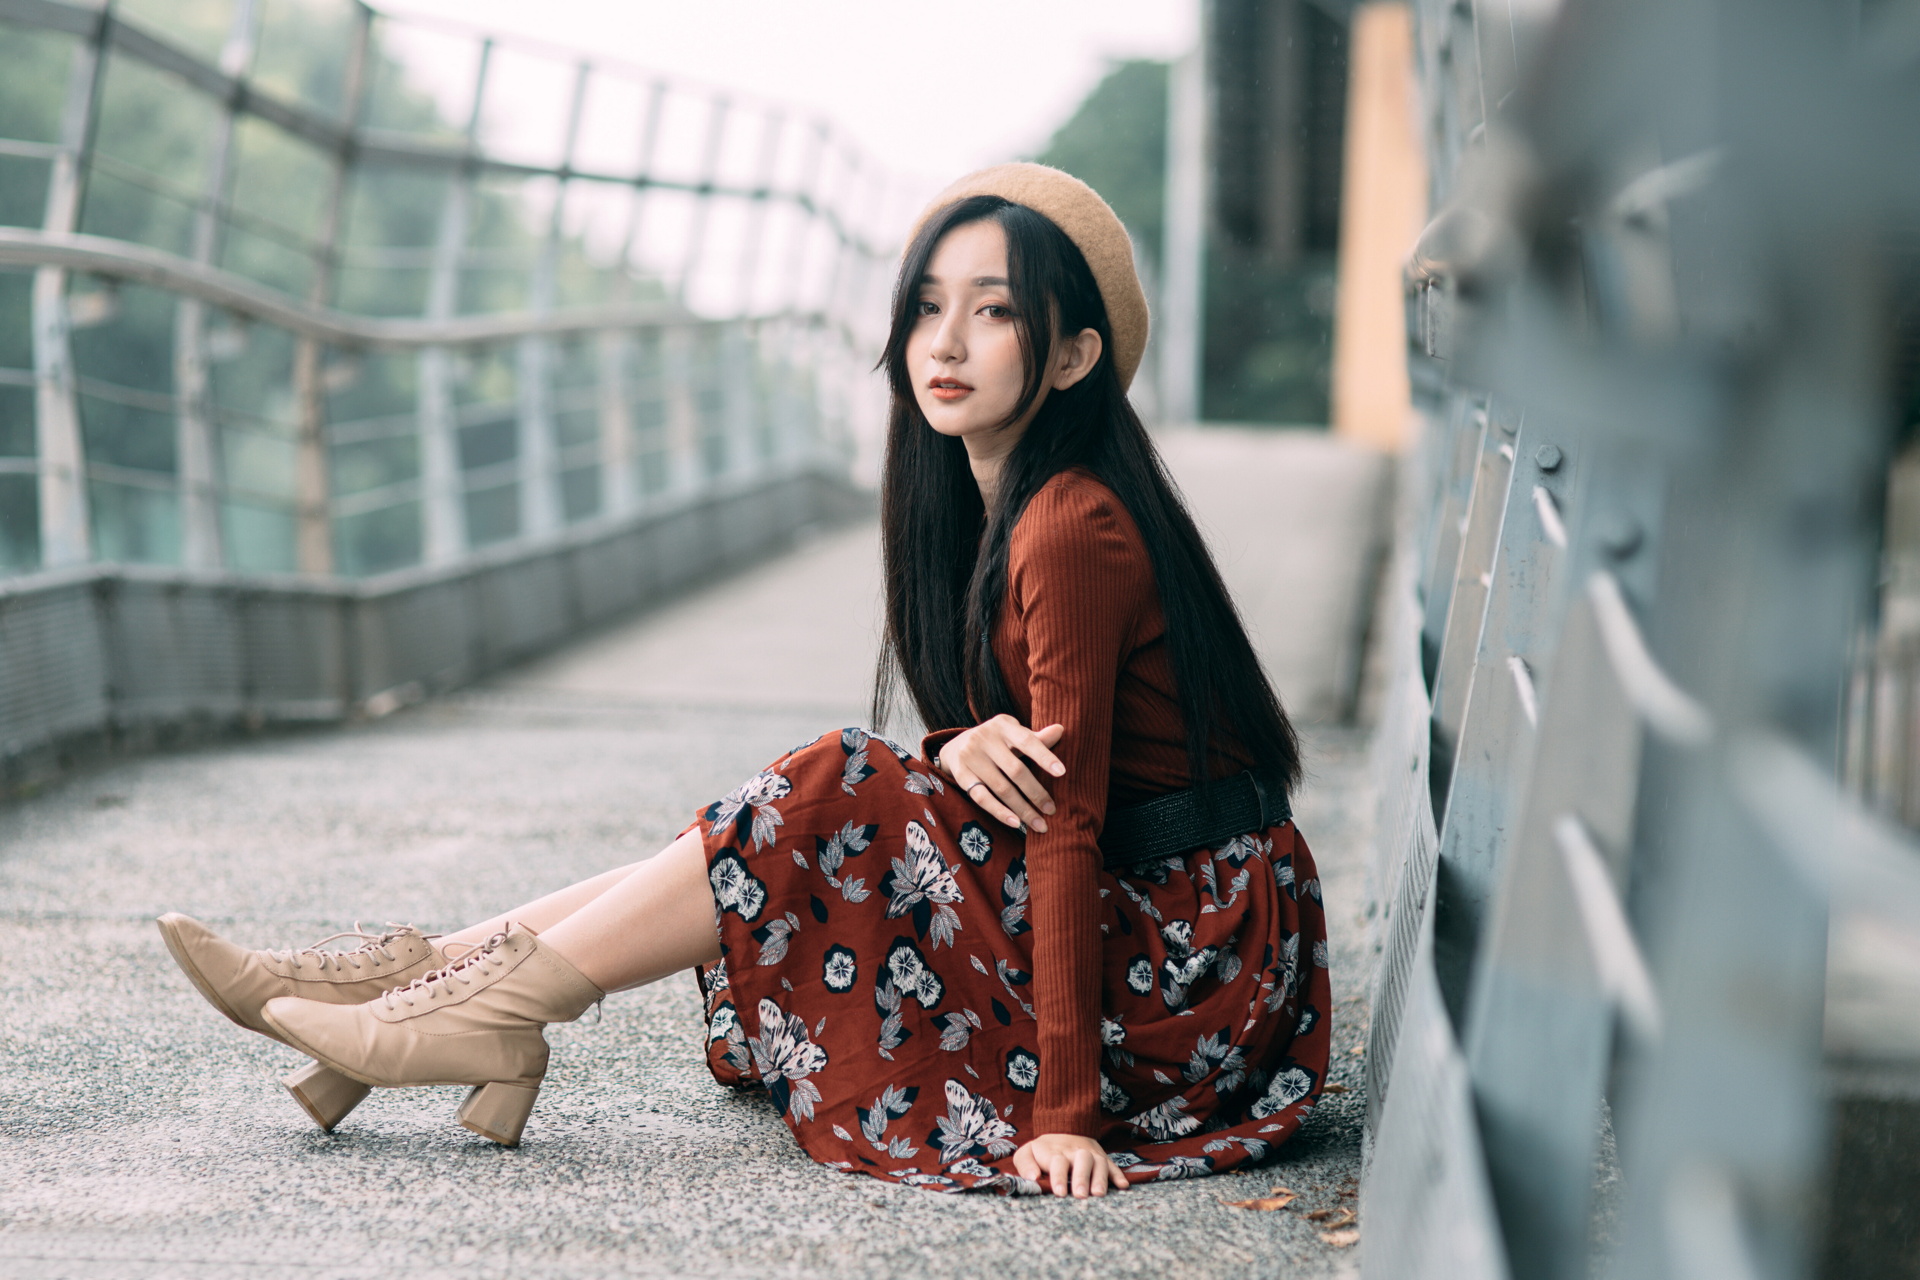 Asian Model Women Long Hair Dark Hair Sitting Women Outdoors Urban Heels Red Clothing Black Hair